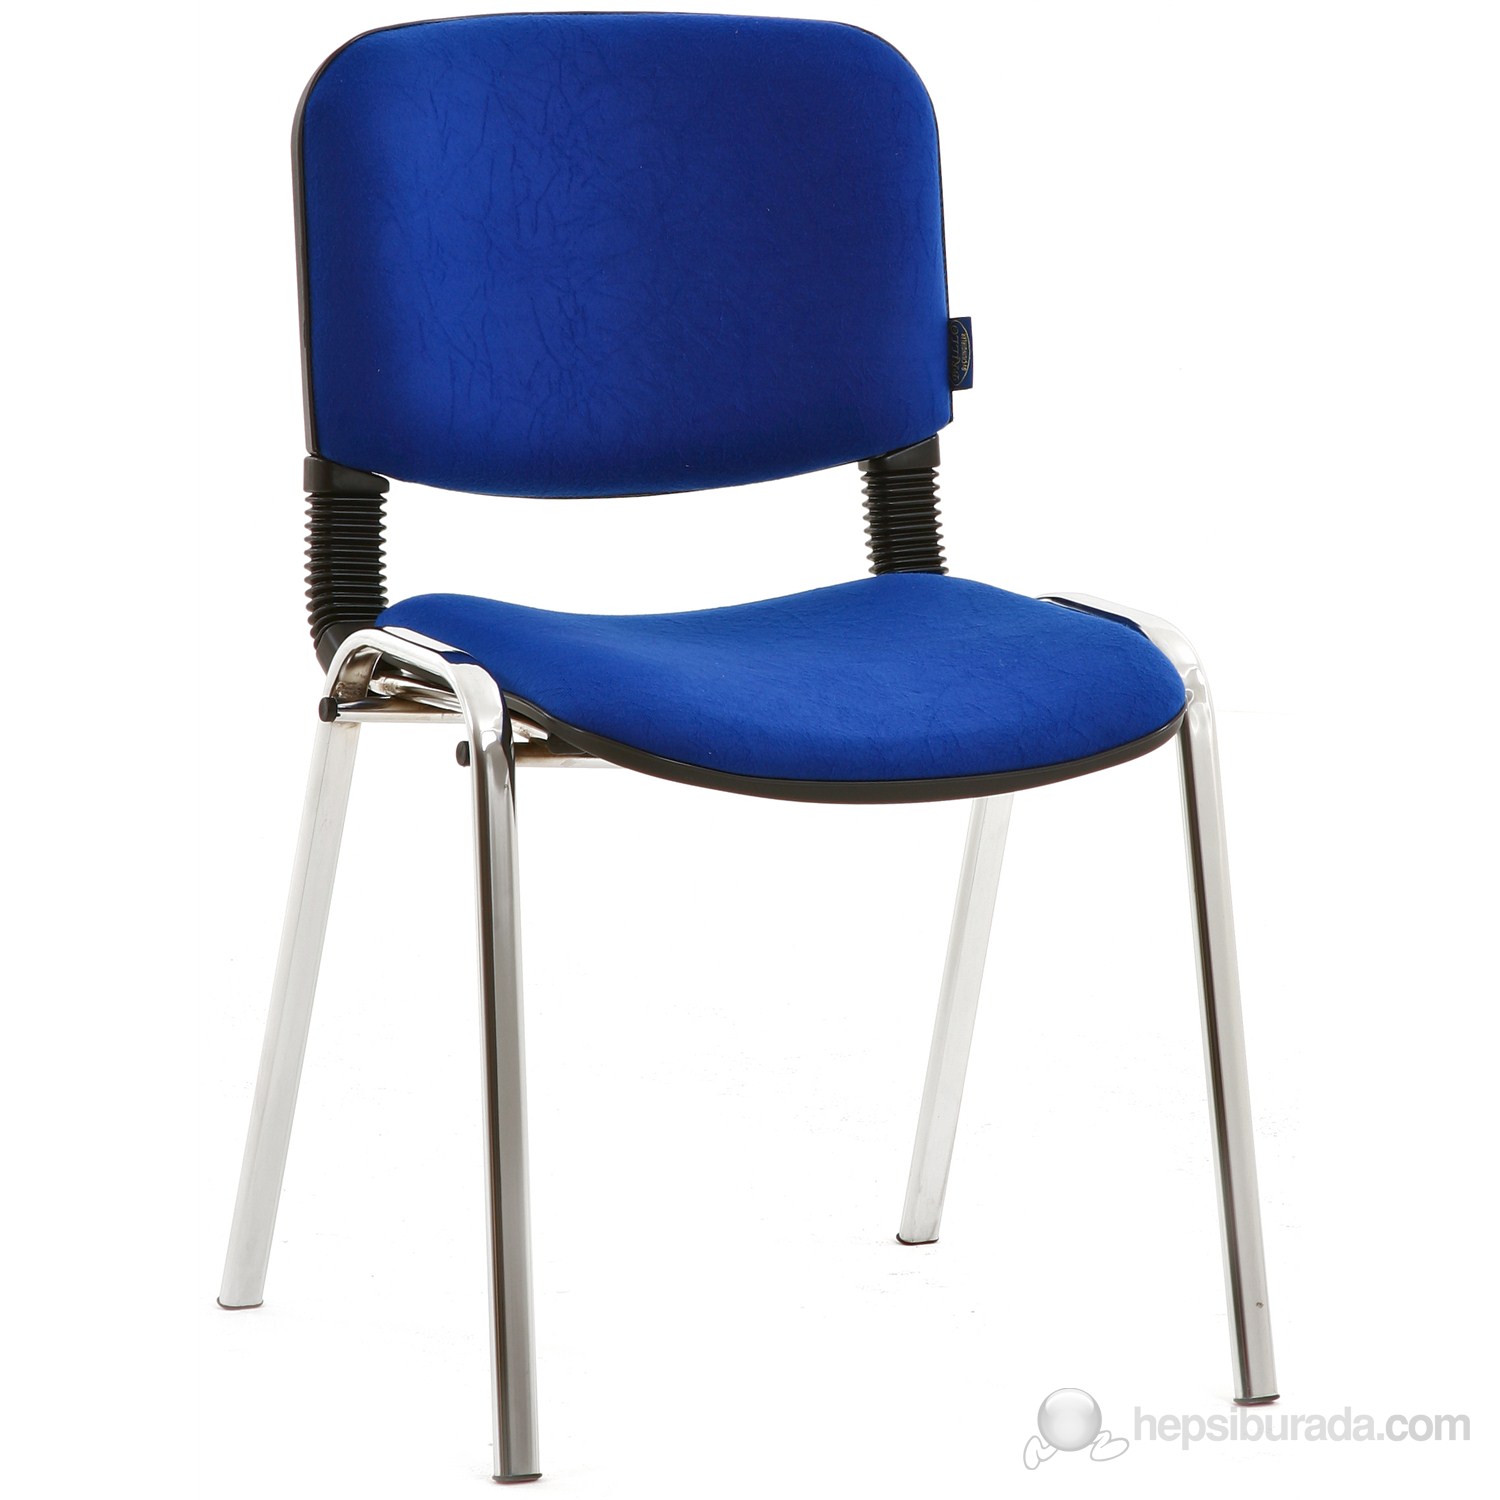 Koltuk Form Sandalye Krom - Mavi